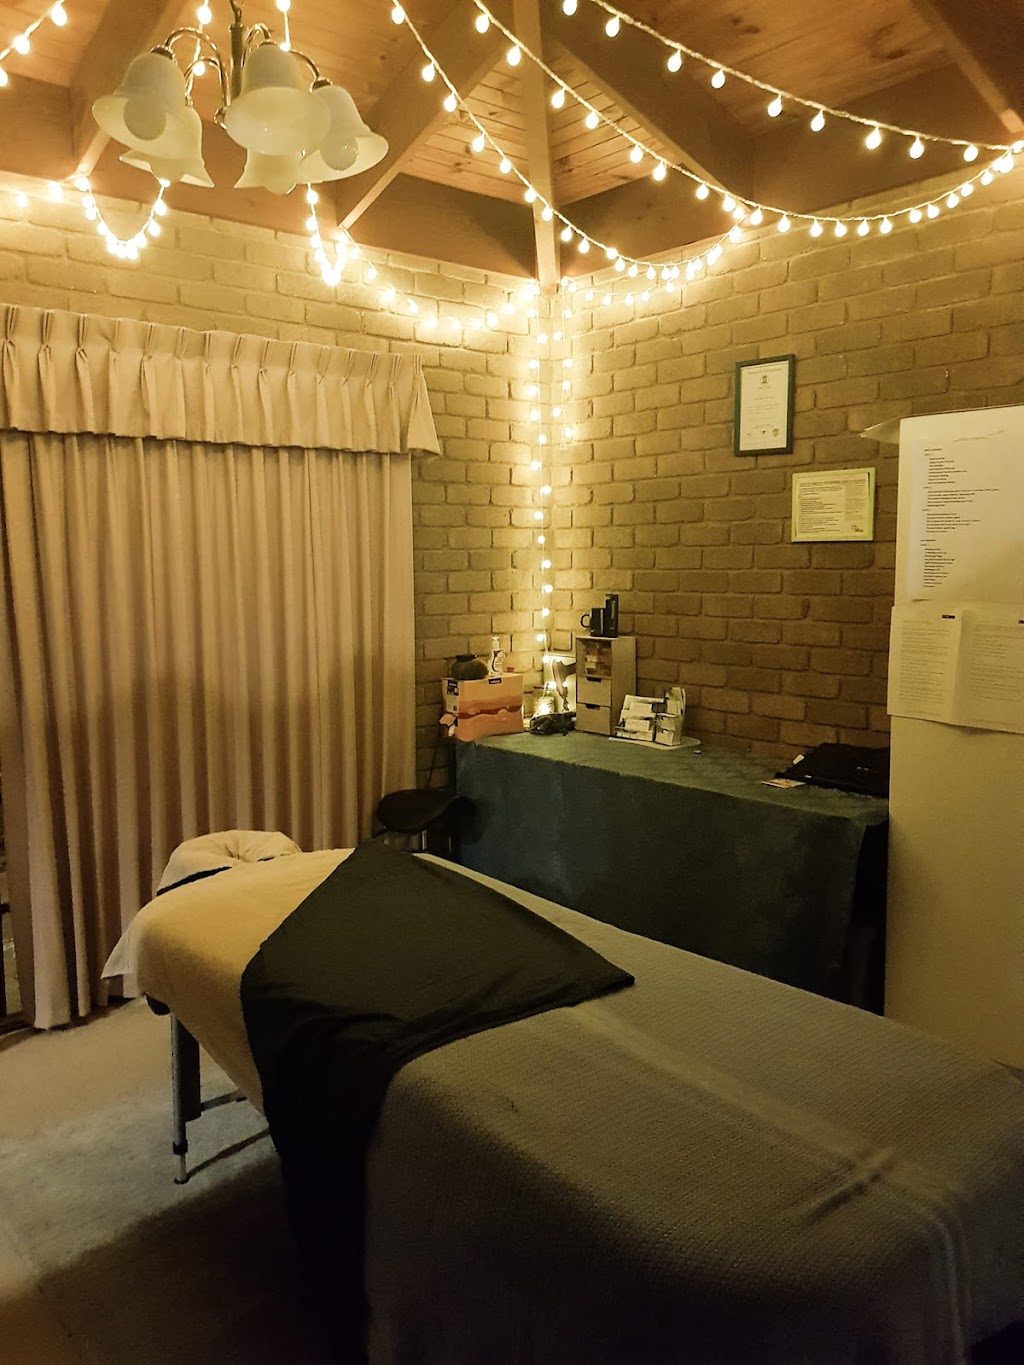 Kezia Manning Massage Therapies - KM|MT |  | 20 Heritage Ct, Junortoun VIC 3551, Australia | 0414522392 OR +61 414 522 392